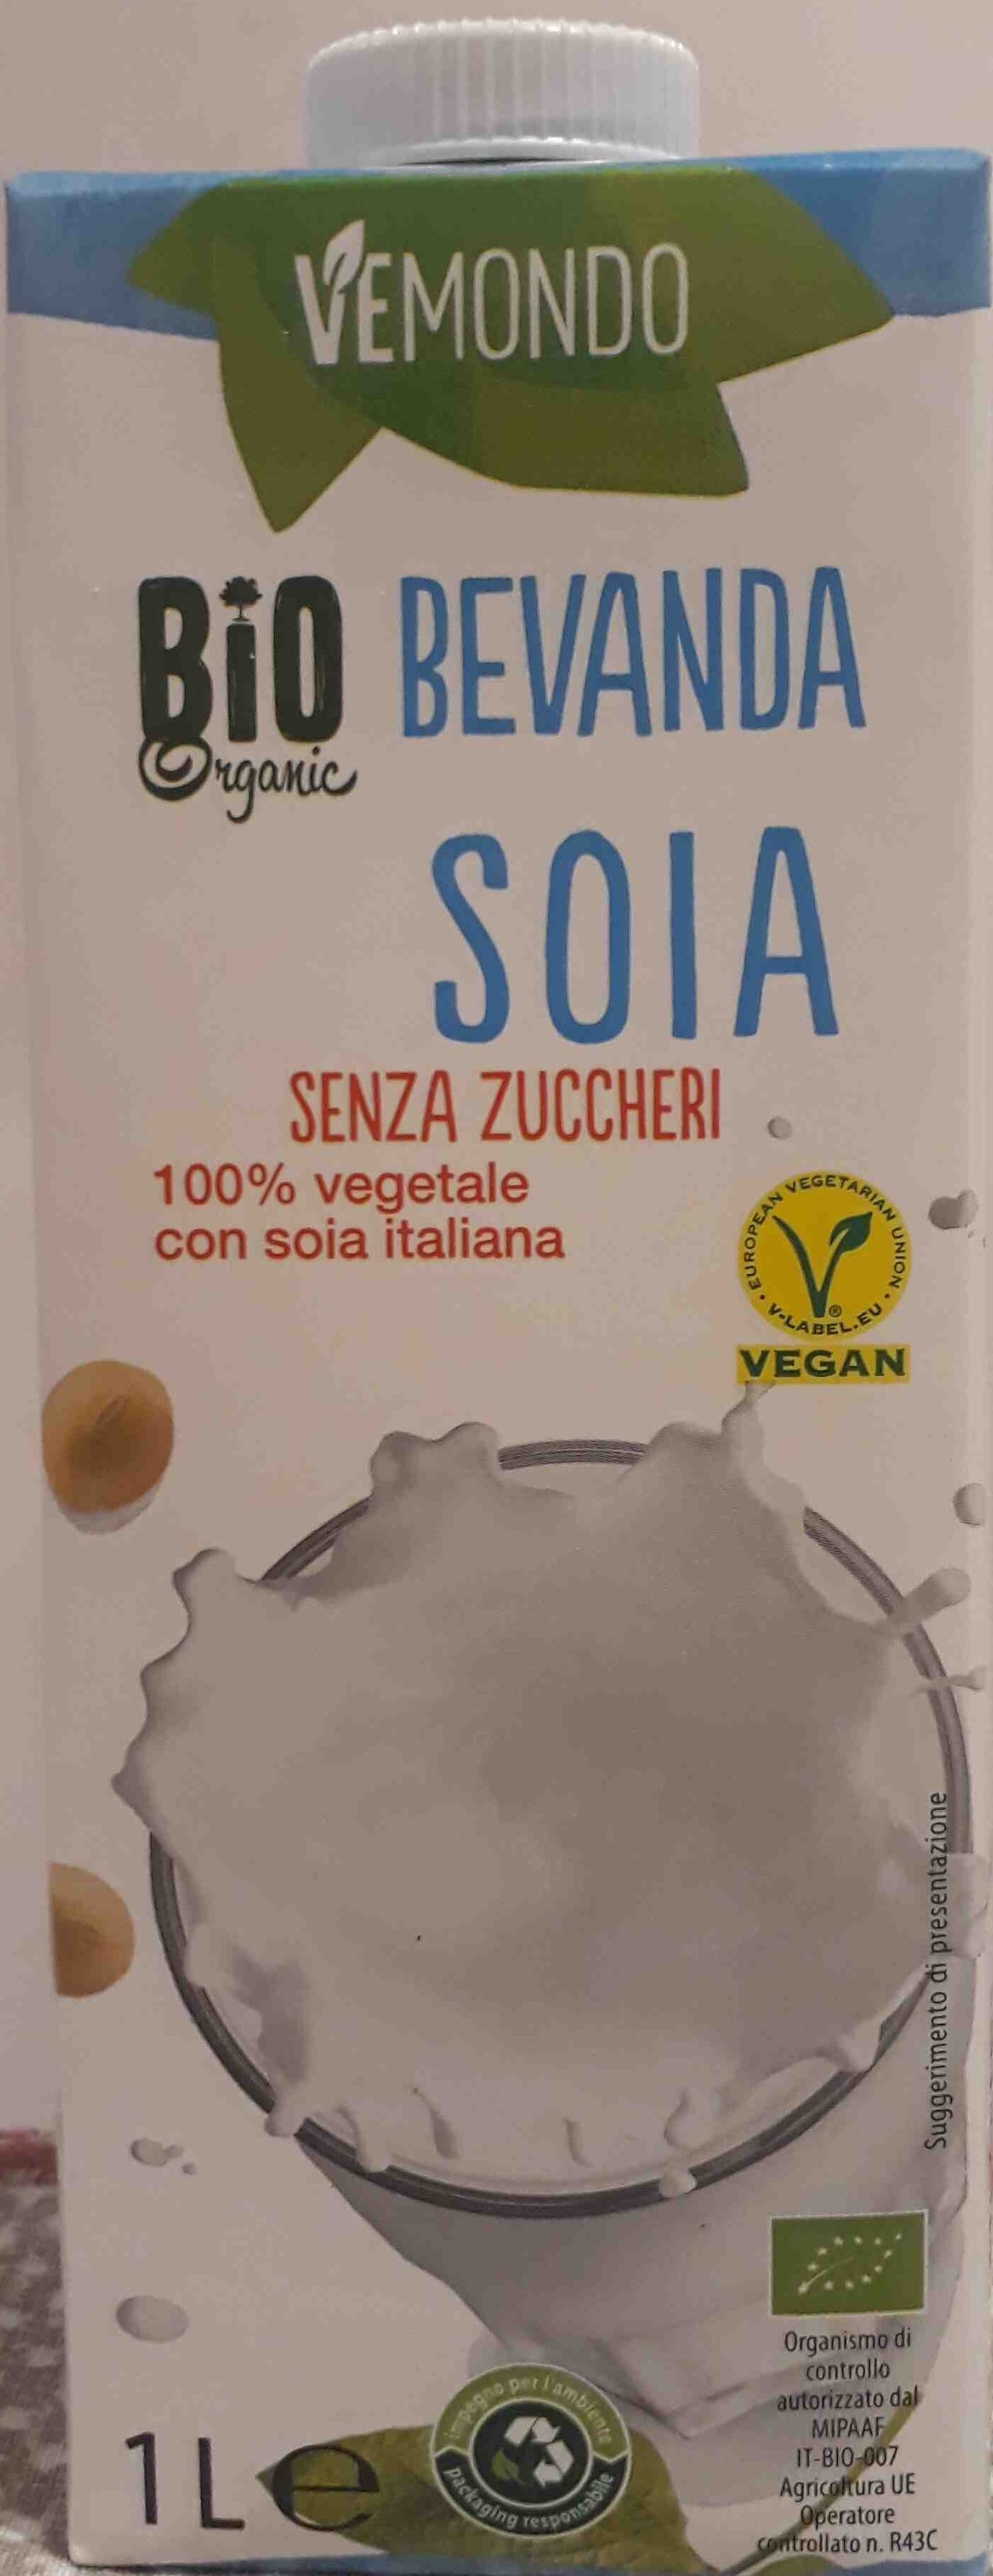 Bevanda Soia - Produkt - it